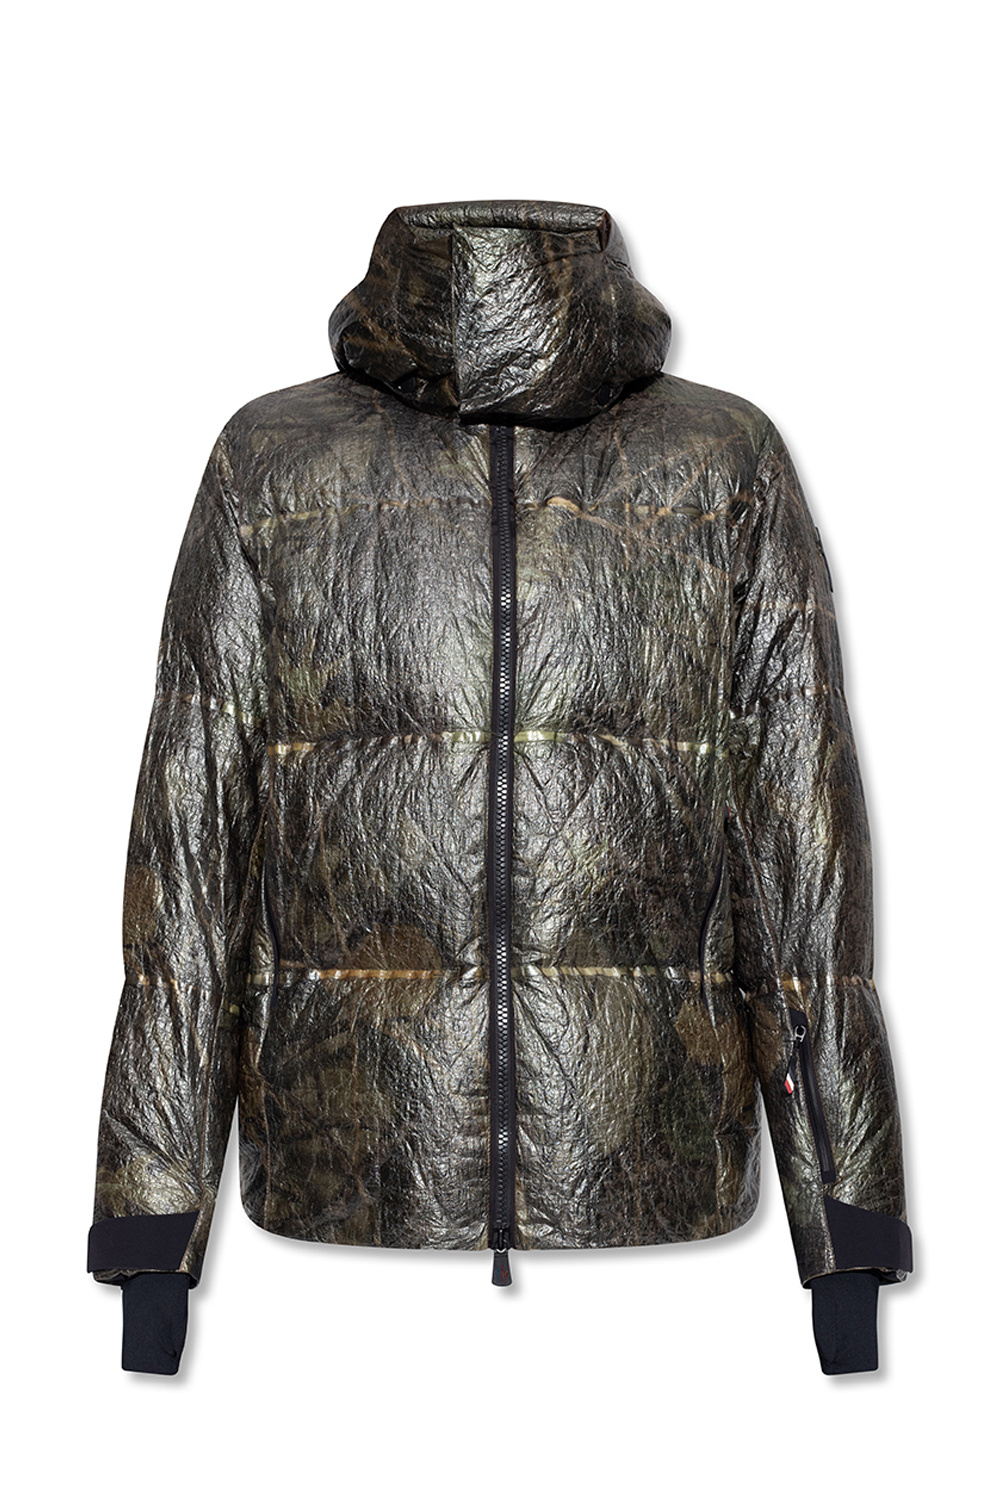 Moncler Grenoble ‘Darry Giubotto’ ski jacket | Men's Clothing | Vitkac